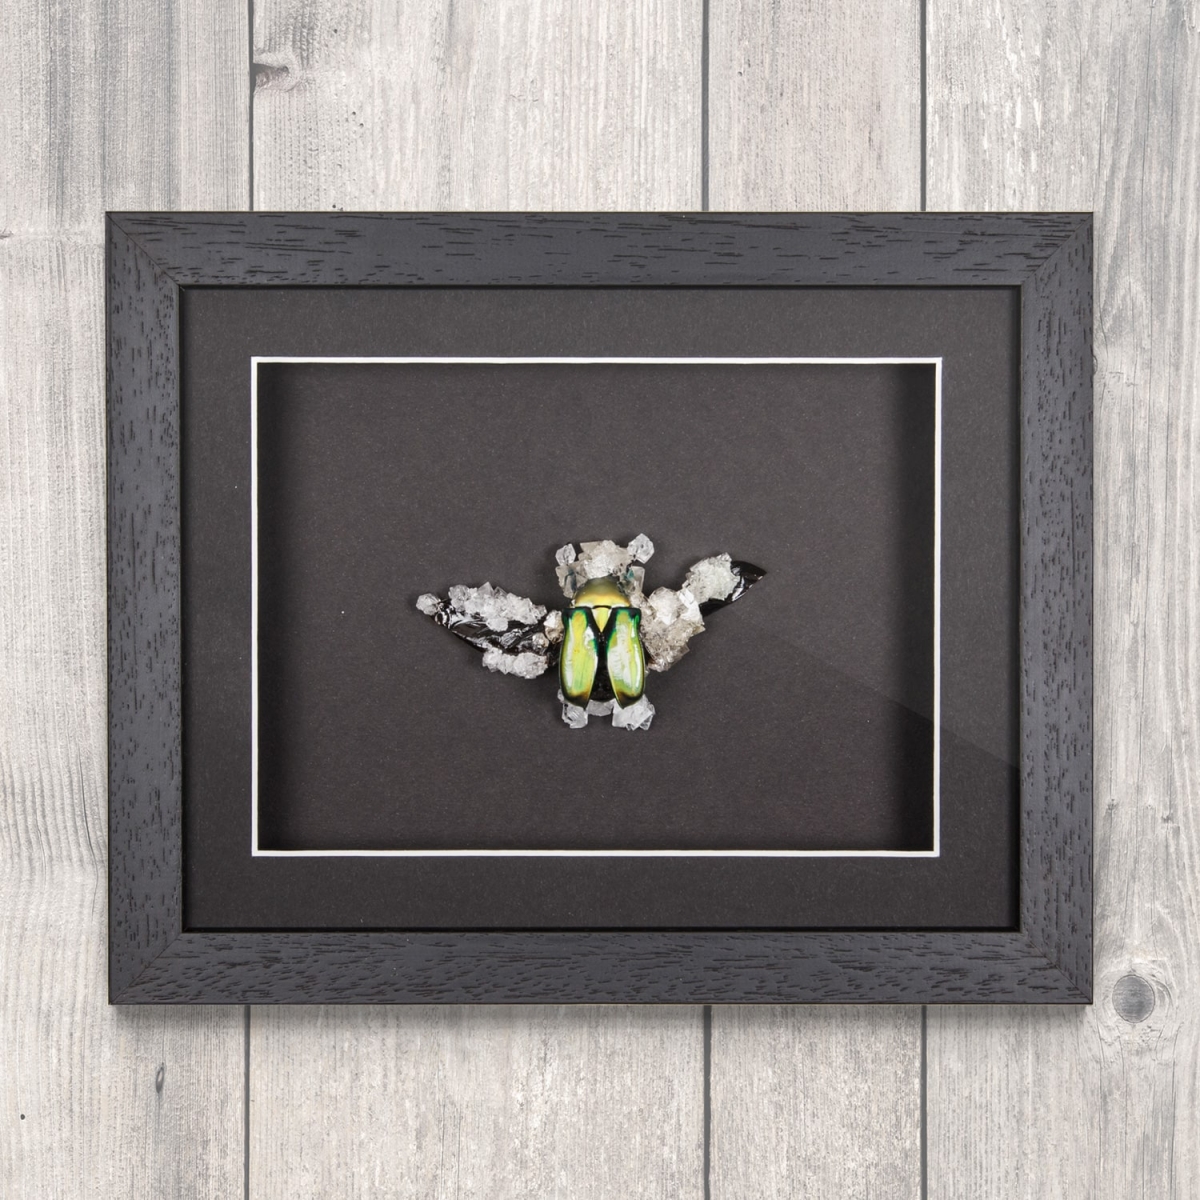 Minibeast Flower Beetle (Rhomborrhina resplendens) with Clear Crystals in Box Frame